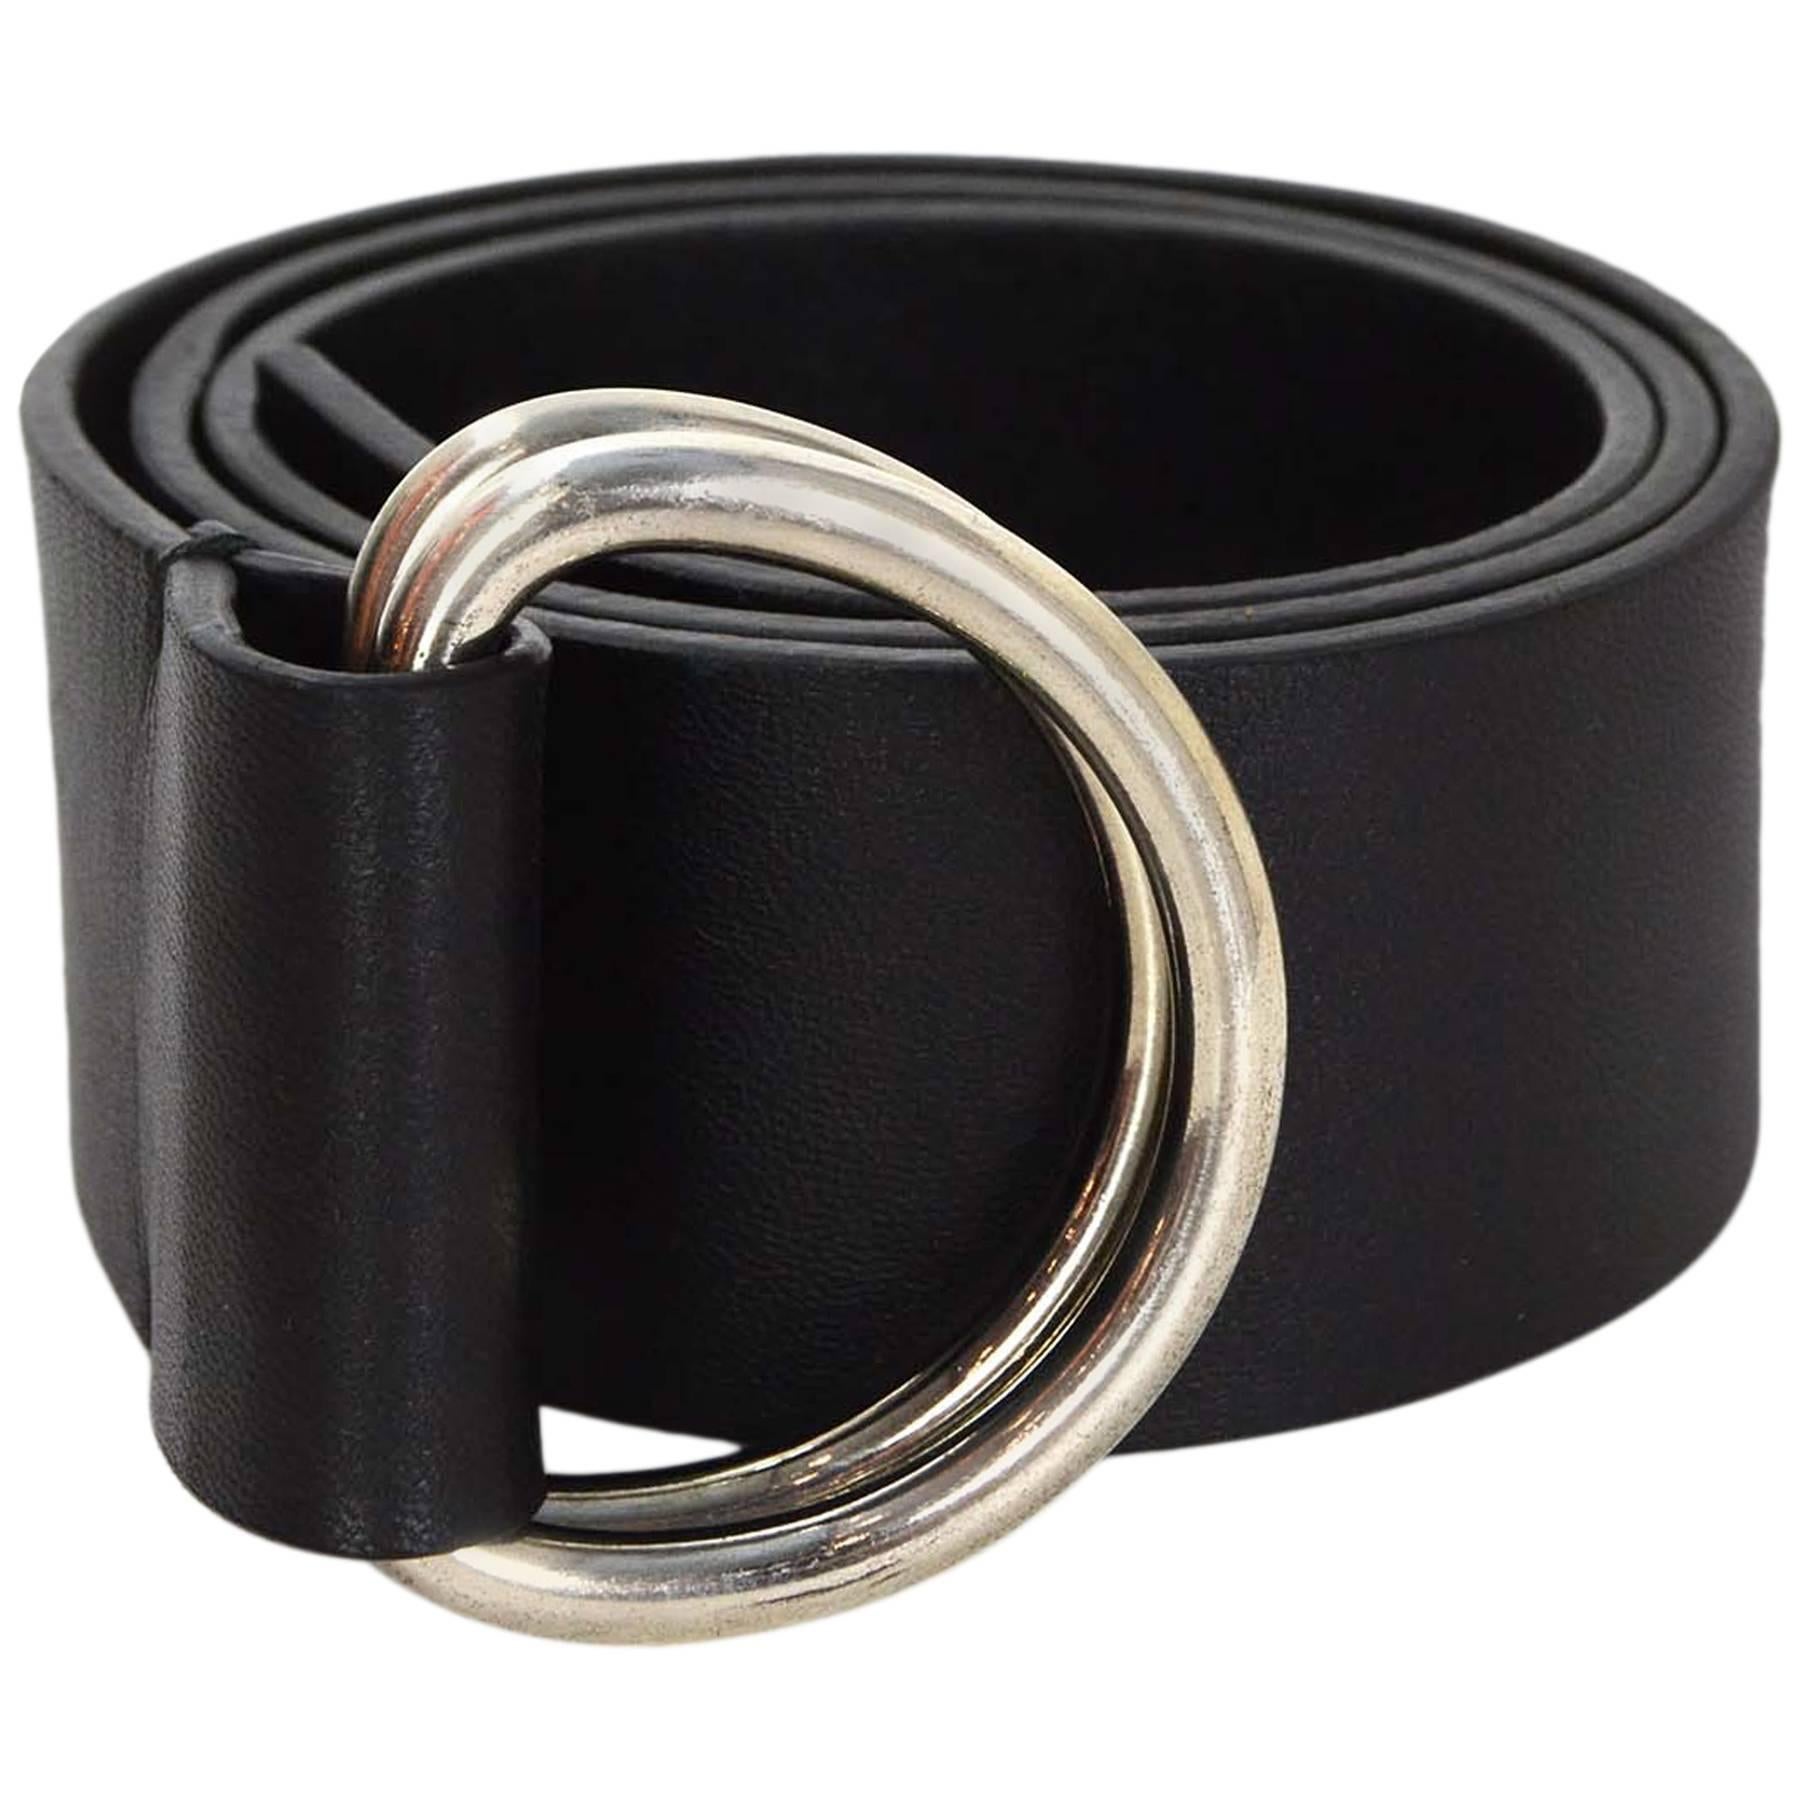 Prada Black Leather Belt sz 85 SHW